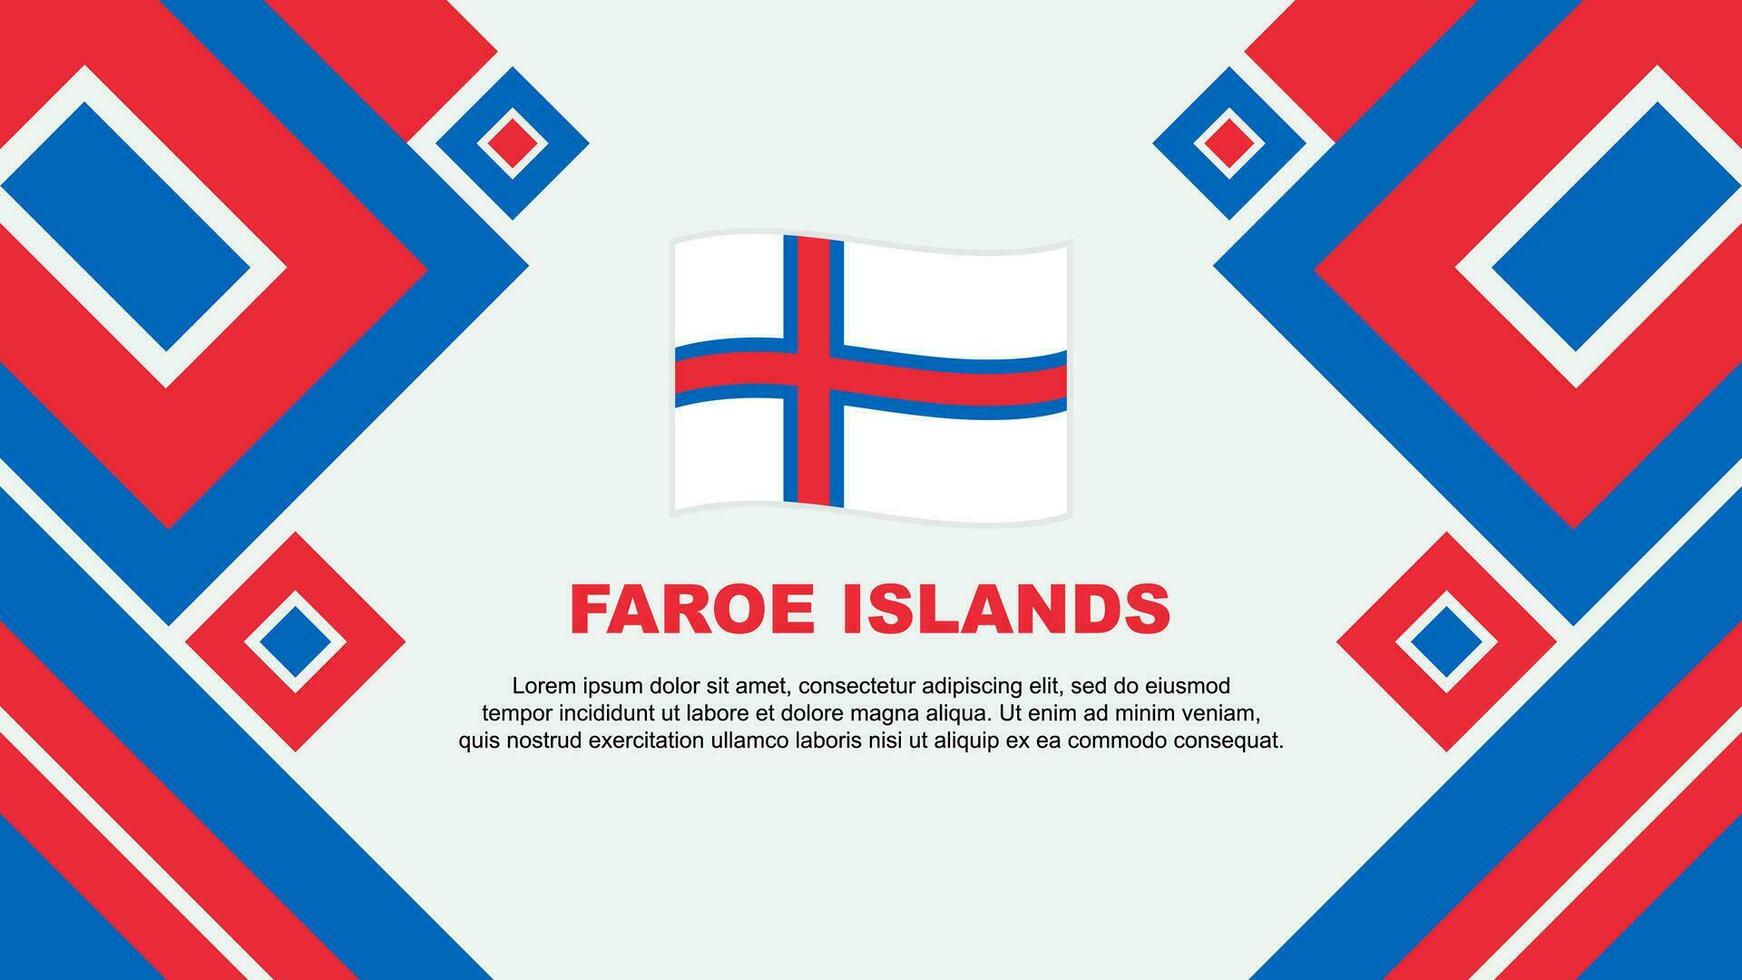 Faroe Islands Flag Abstract Background Design Template. Faroe Islands Independence Day Banner Wallpaper Vector Illustration. Faroe Islands Cartoon